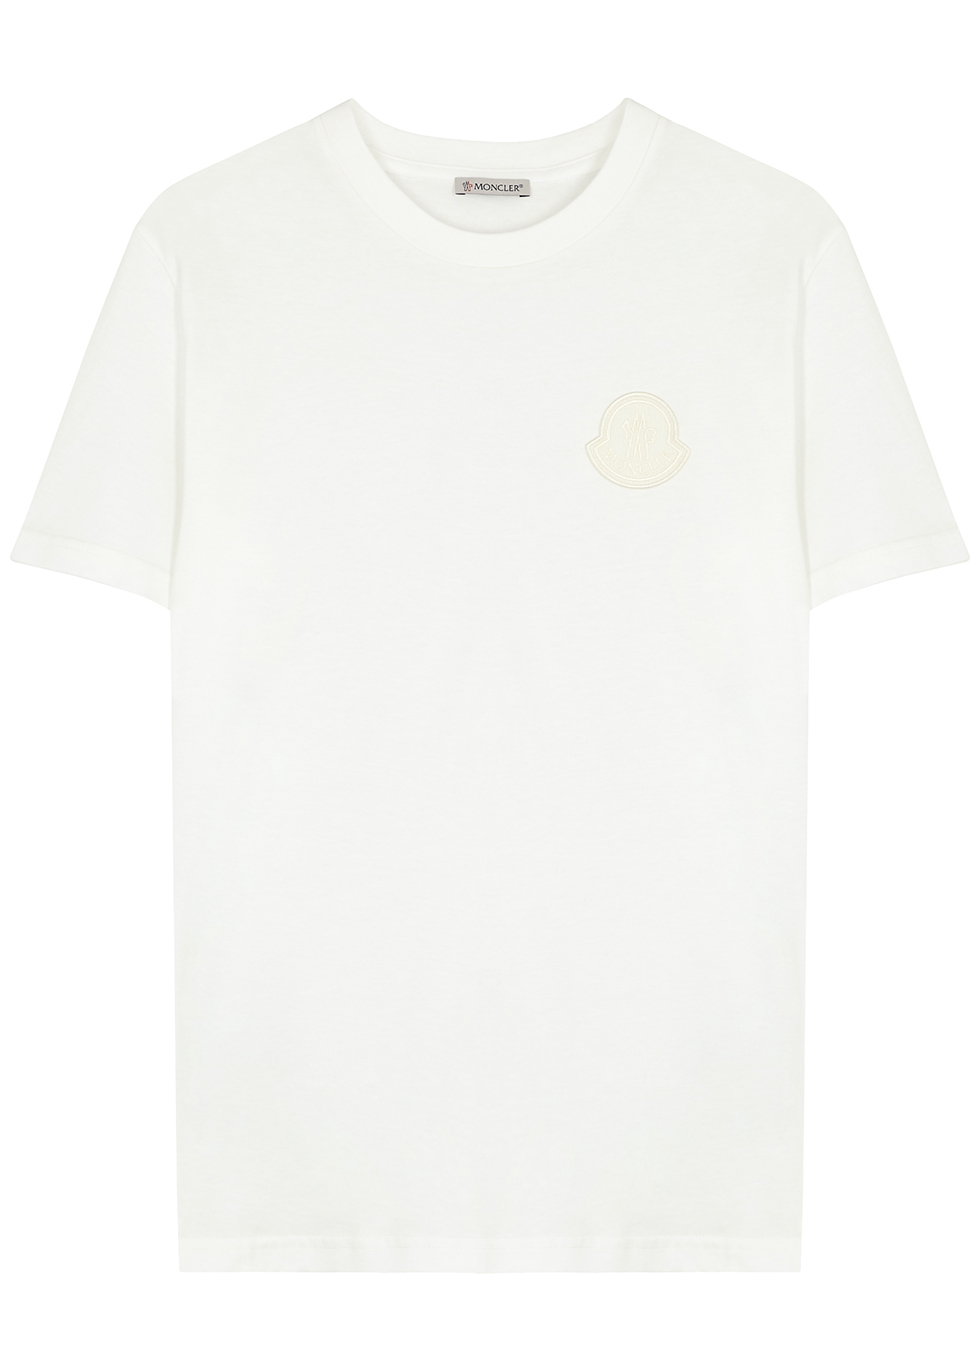 moncler white logo t shirt